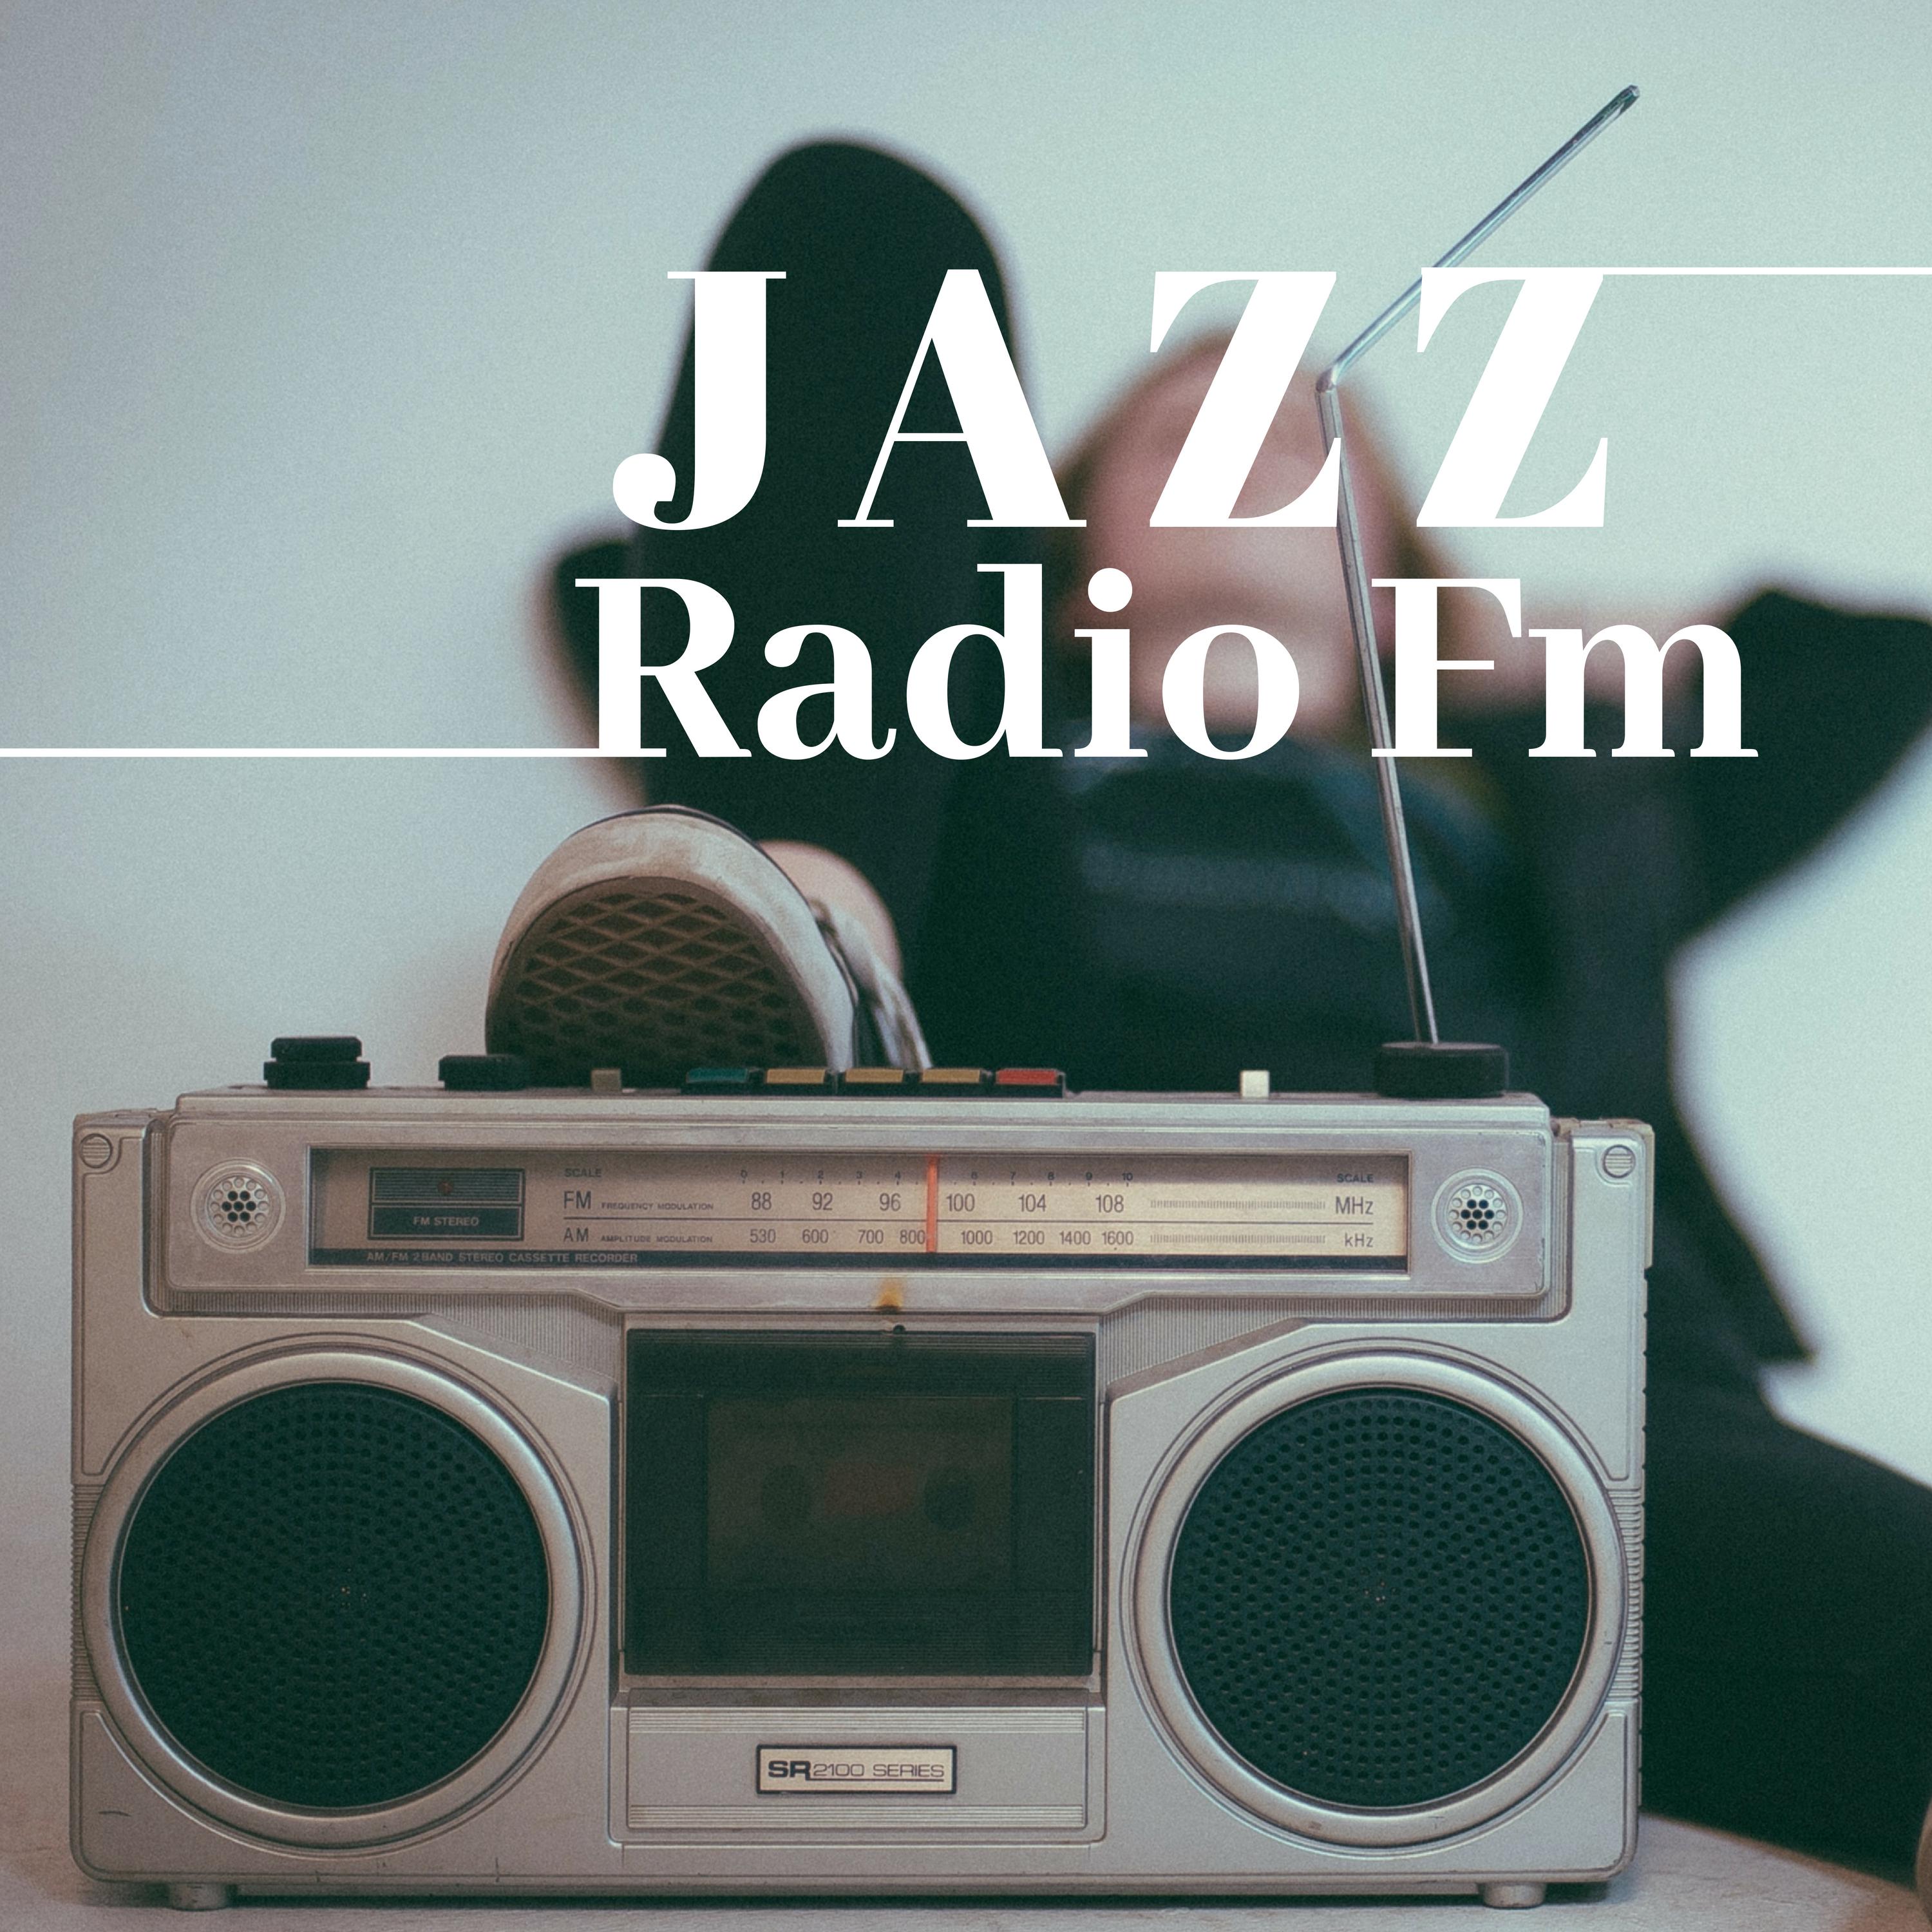 Jazz Radio Fm - The Very Best in Smooth Jazz Music, Nu Jazz, Afro-Cuban Jazz, Ethno Jazz, Jazz Fusion